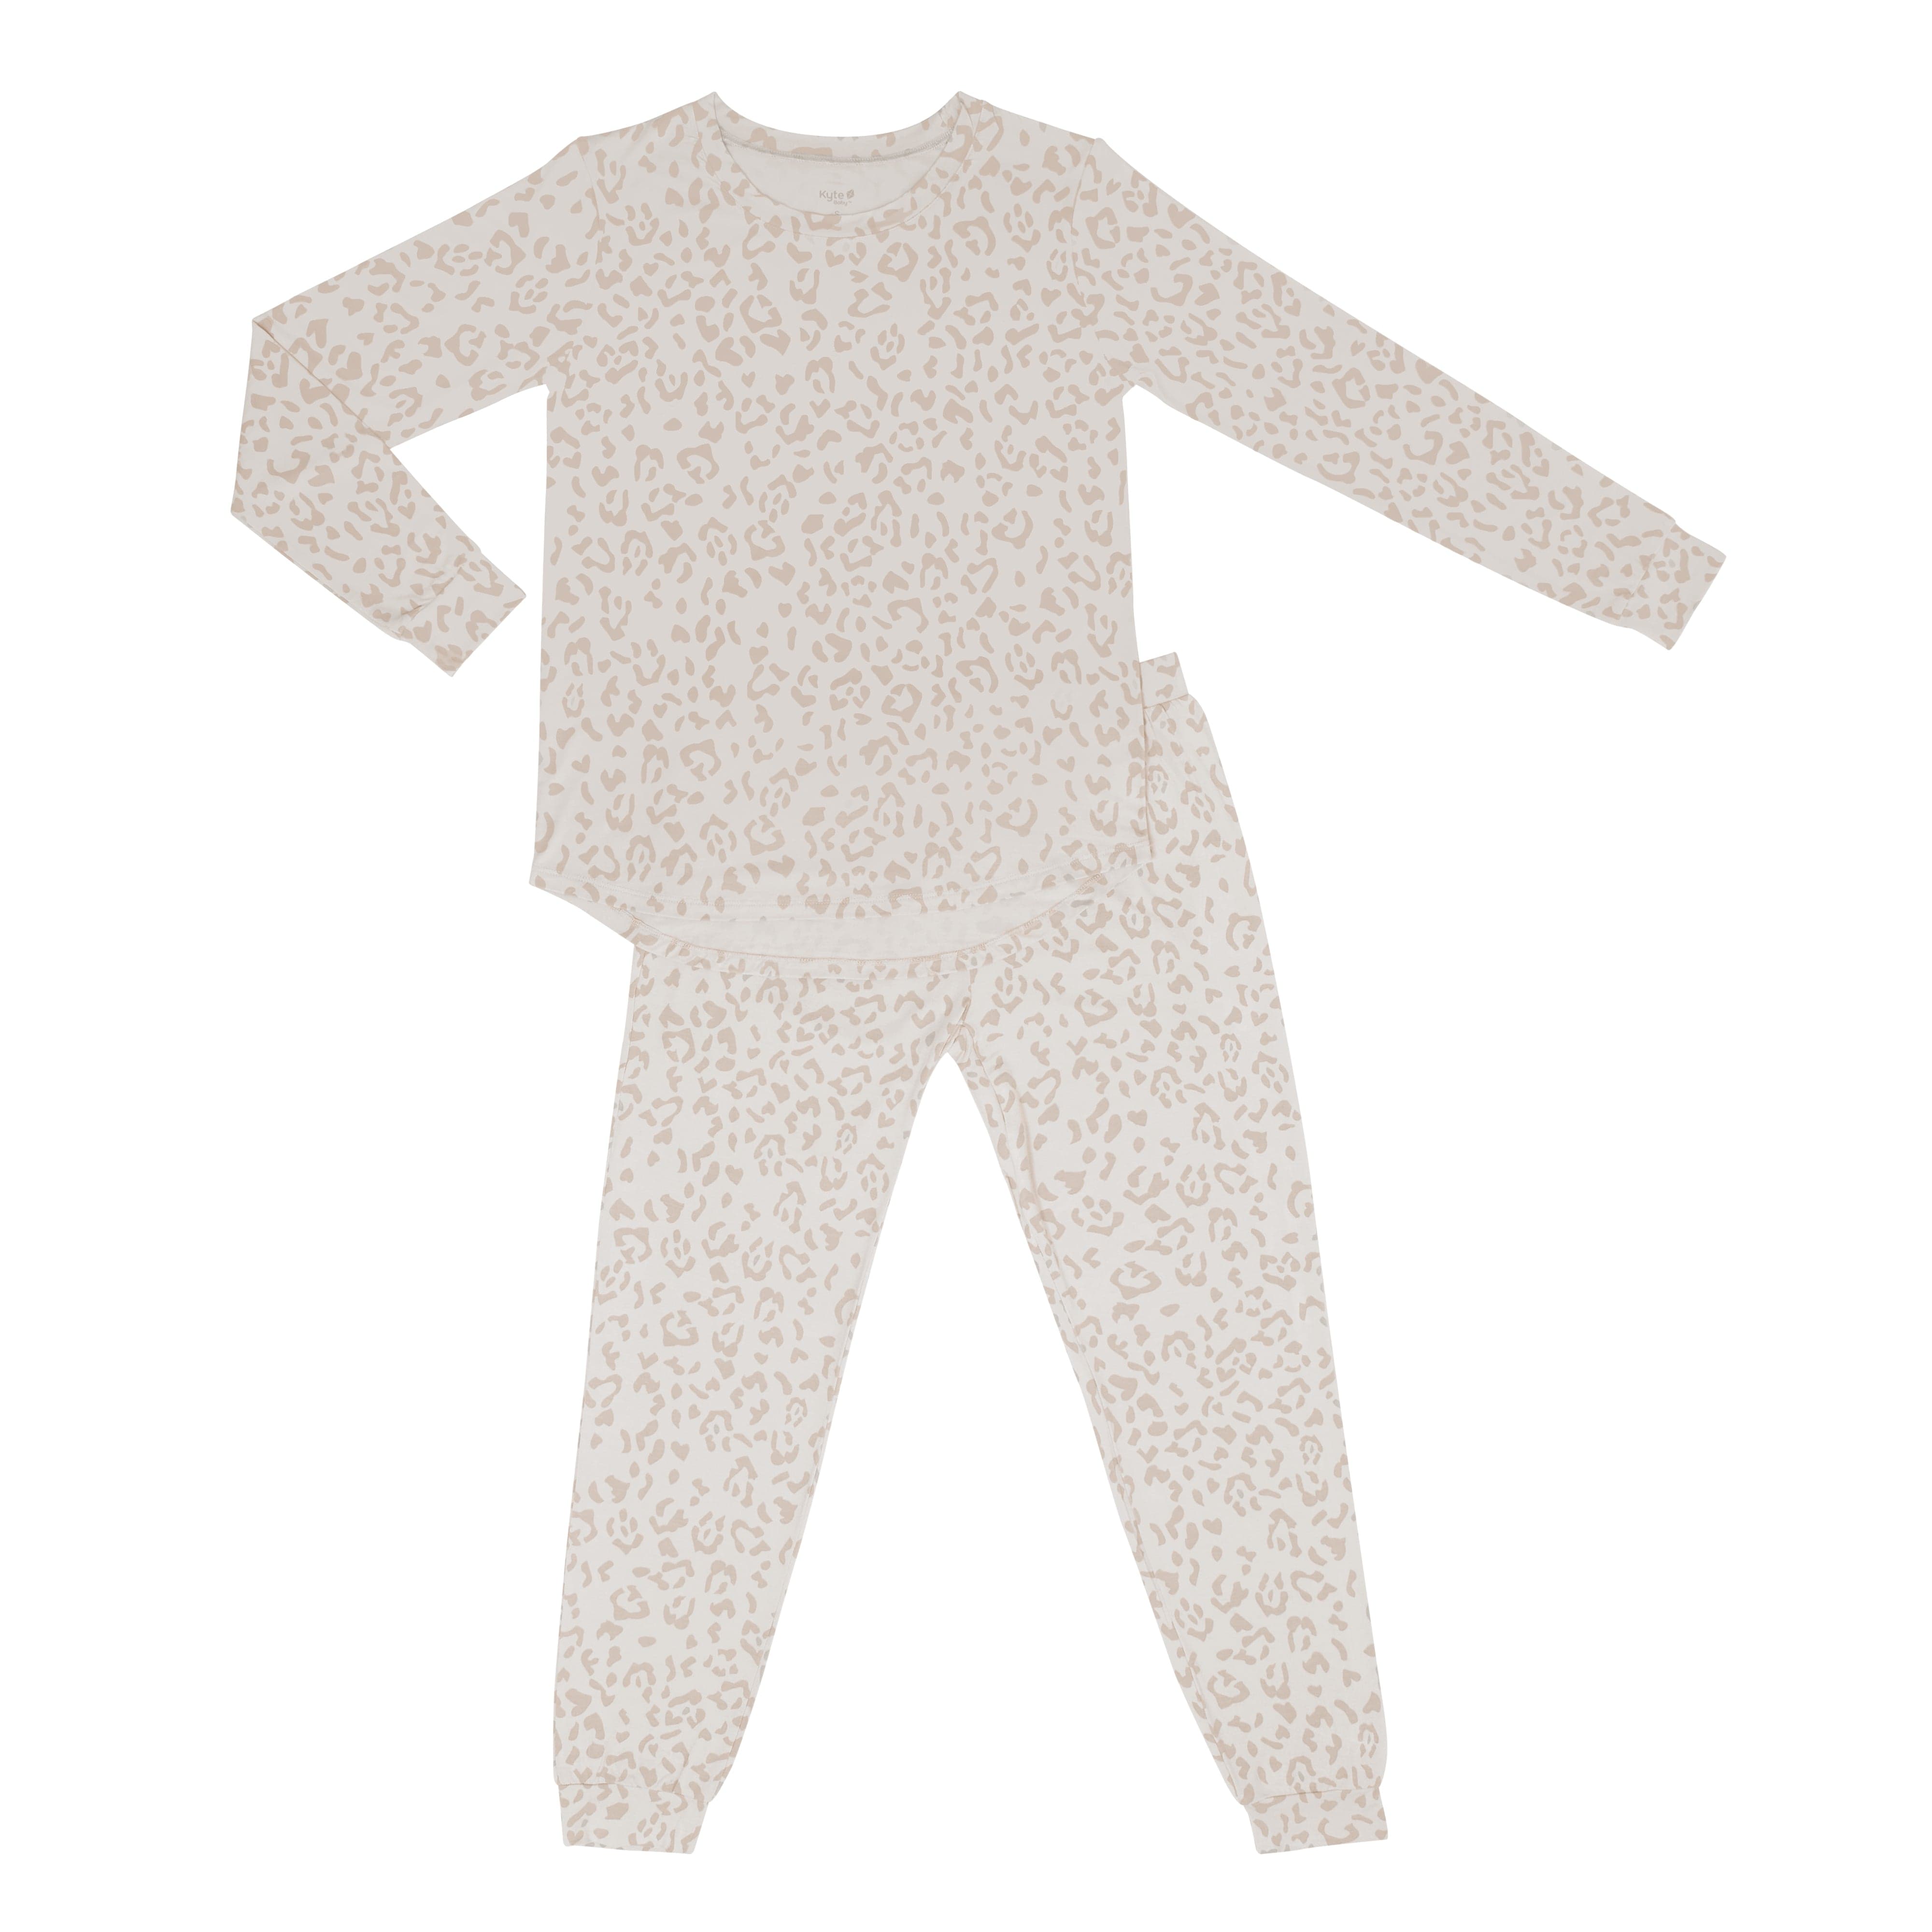 Kucnuzki Christmas Pajamas Family Pajama Pants Pj Set for Women Men Baby  Boy Girl Kids Matching Pajamas, White, 12-18 months price in Saudi Arabia,  Saudi Arabia